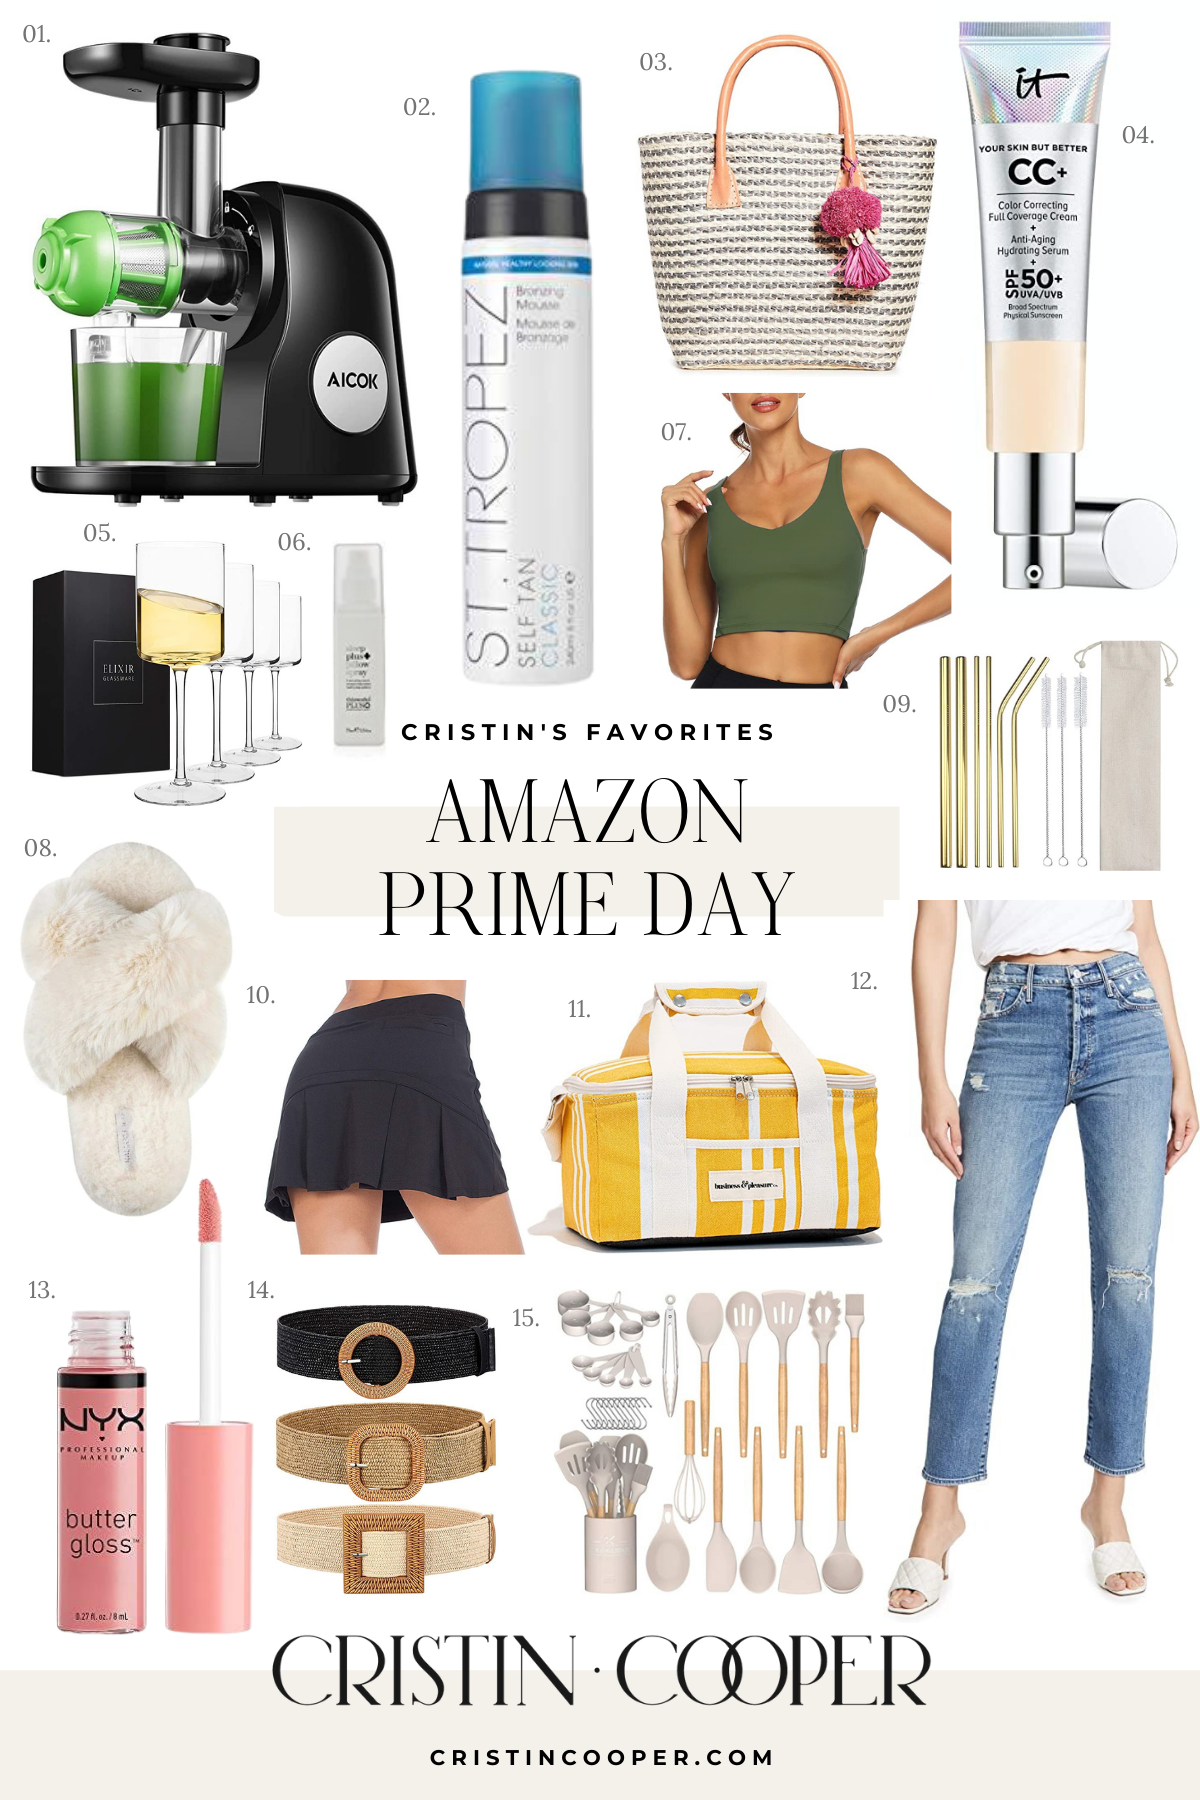 Amazon Prime Day - Cristin's Favorites